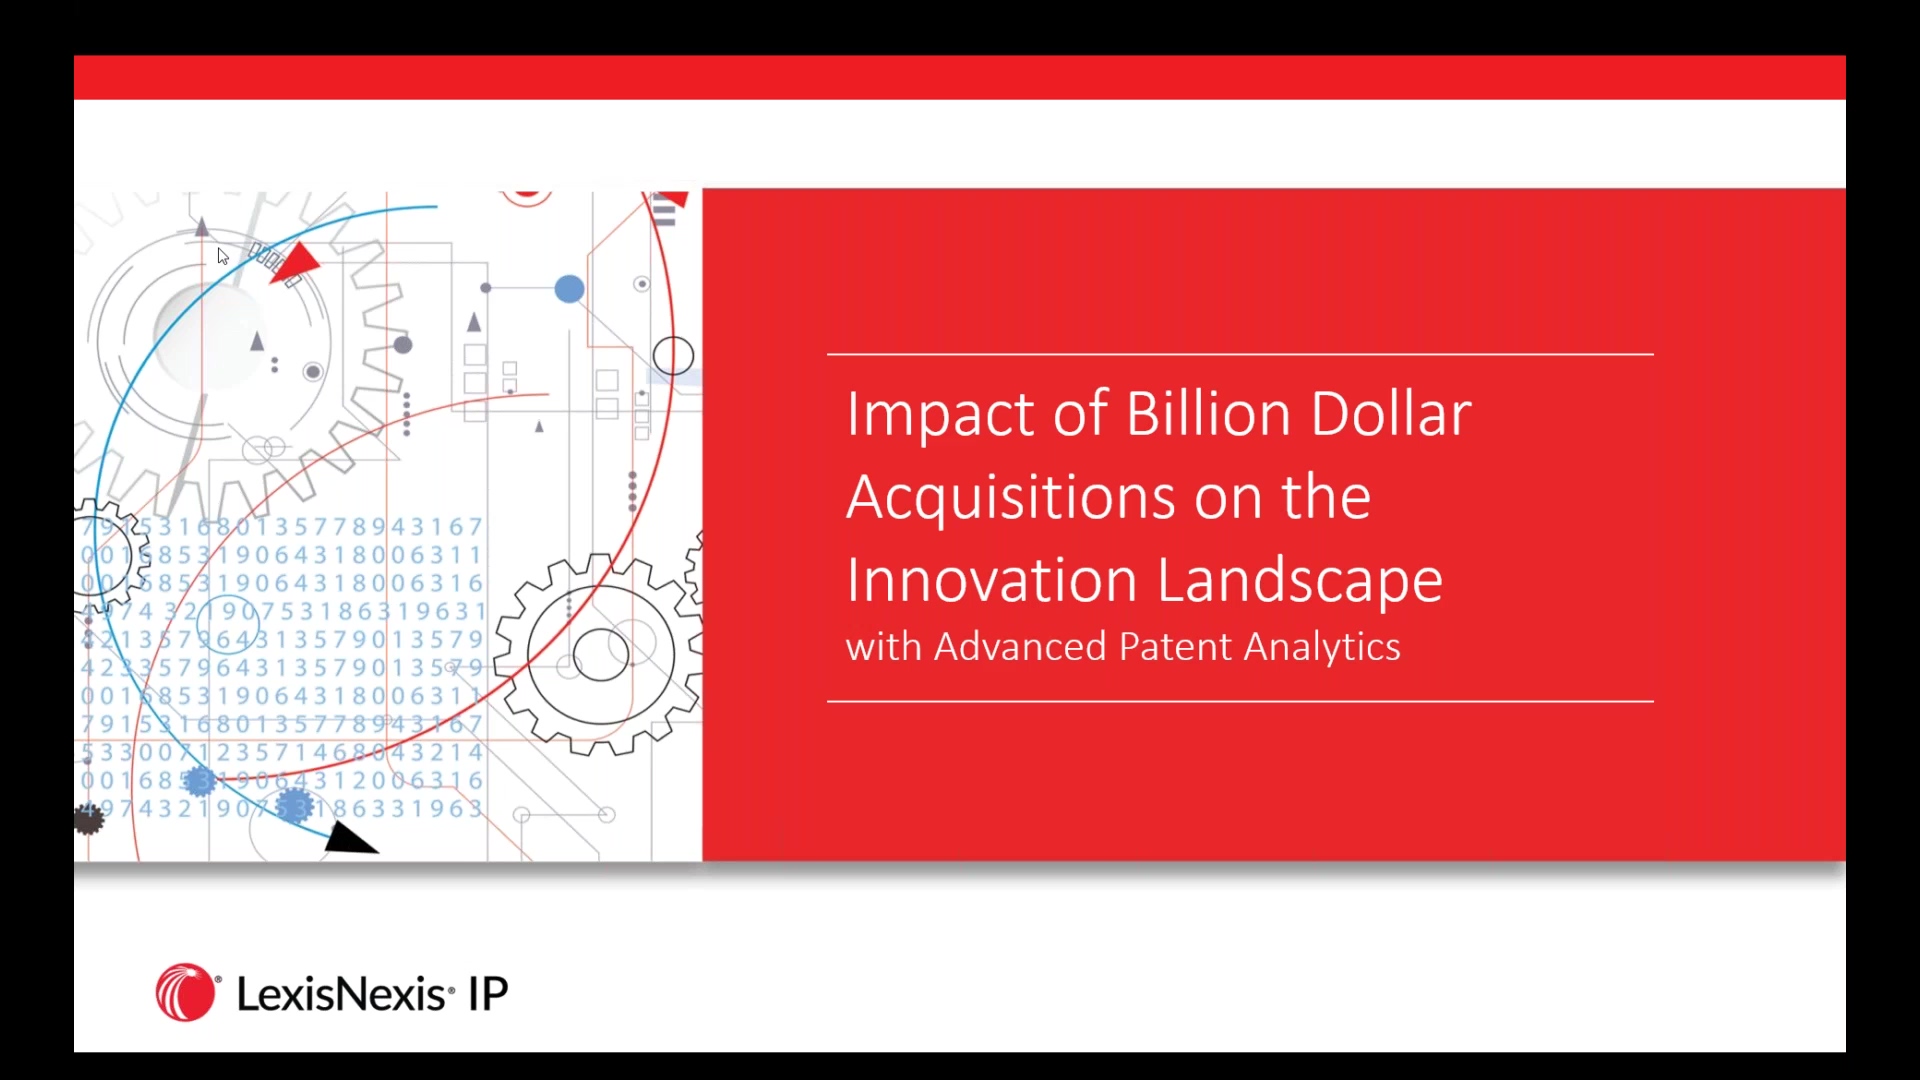 IP - PS - Leads Webinar - The Next Billion-Dollar Acquisition in Pharma